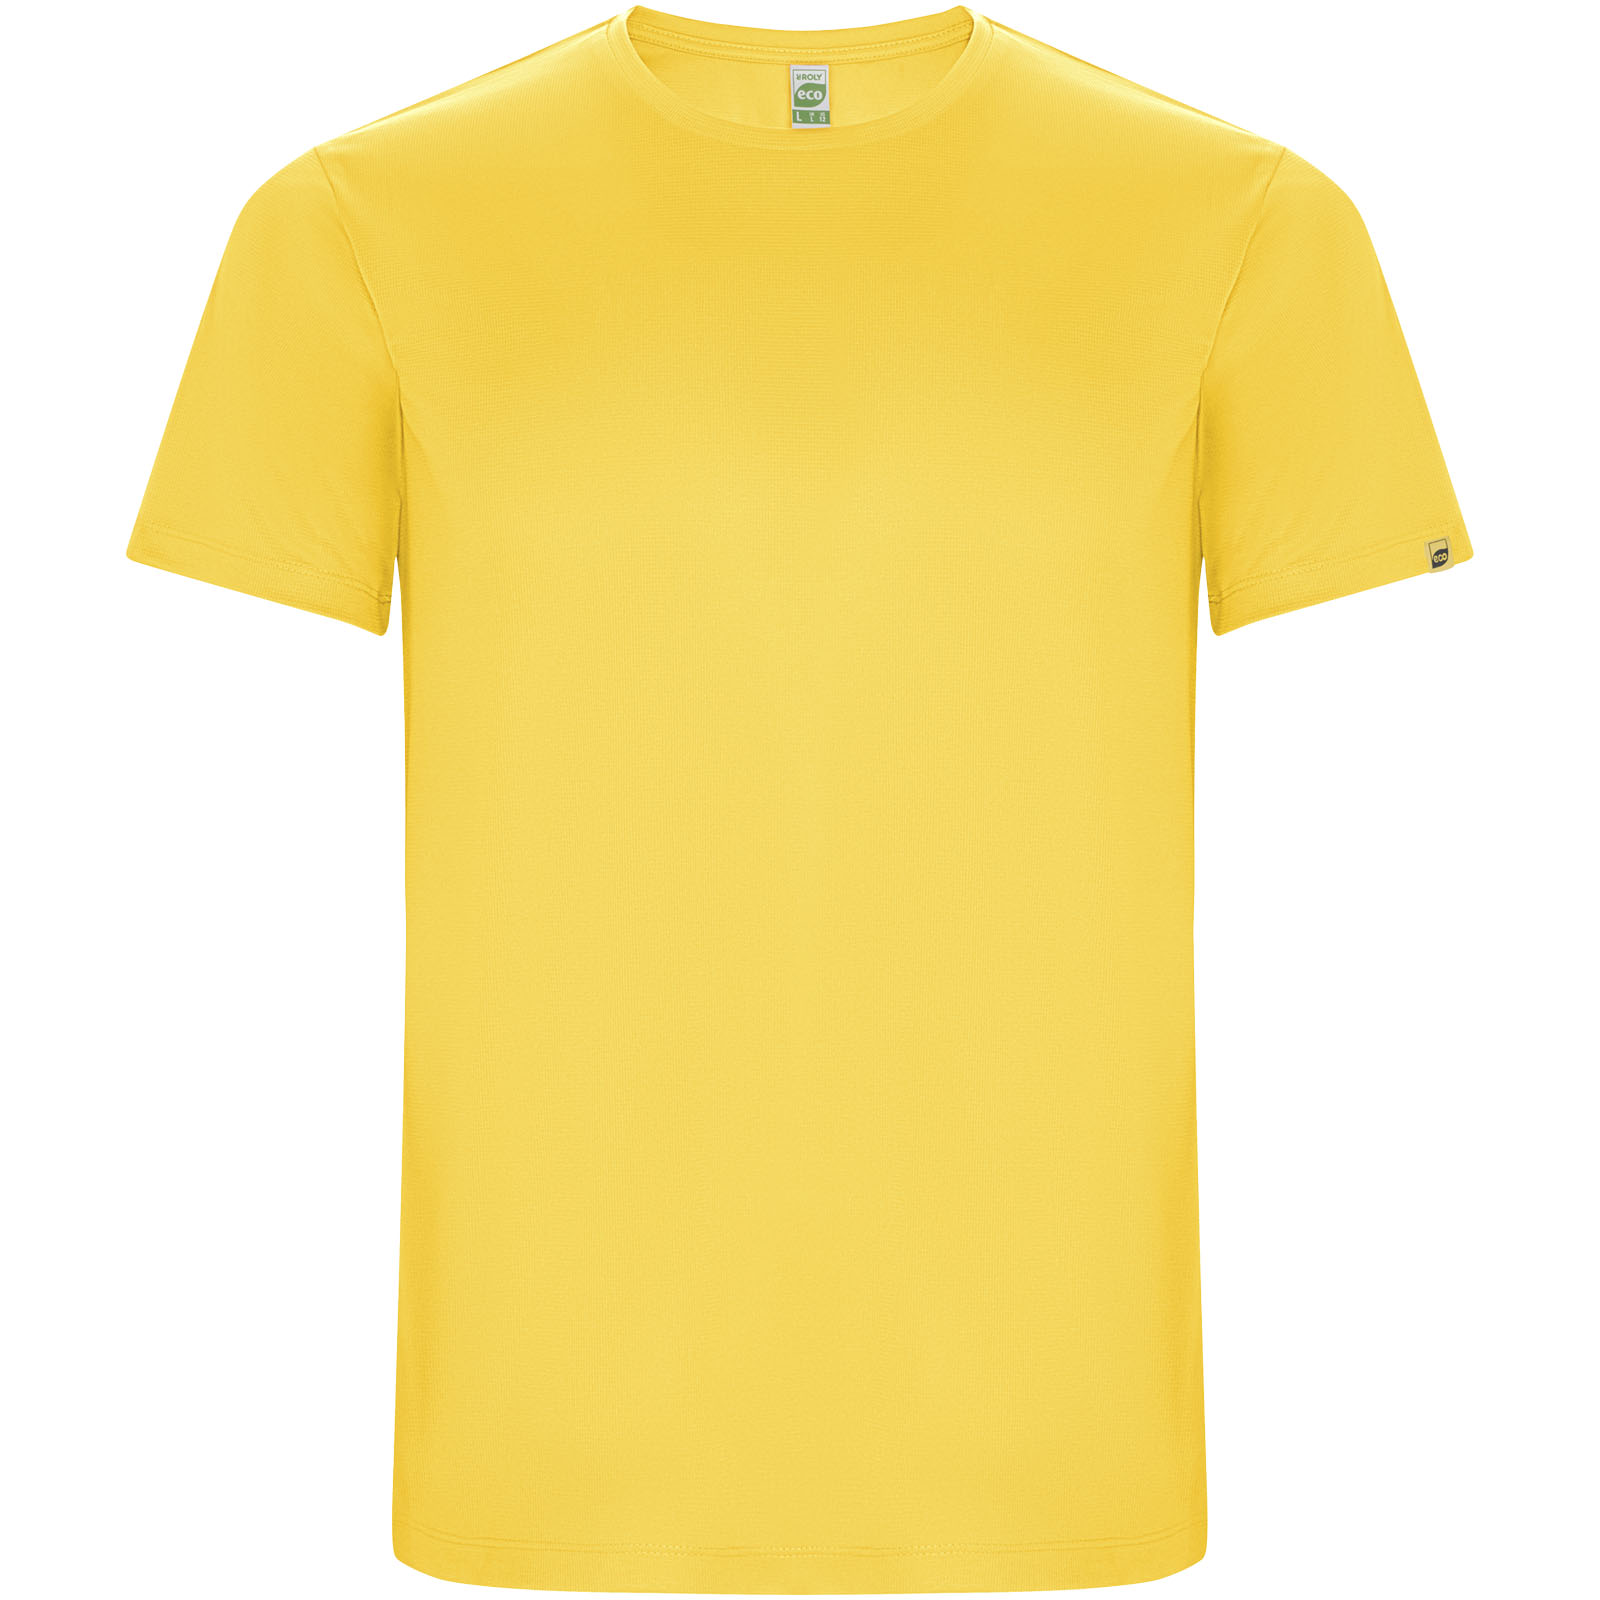 Advertising T-shirts - Imola short sleeve men's sports t-shirt - 0